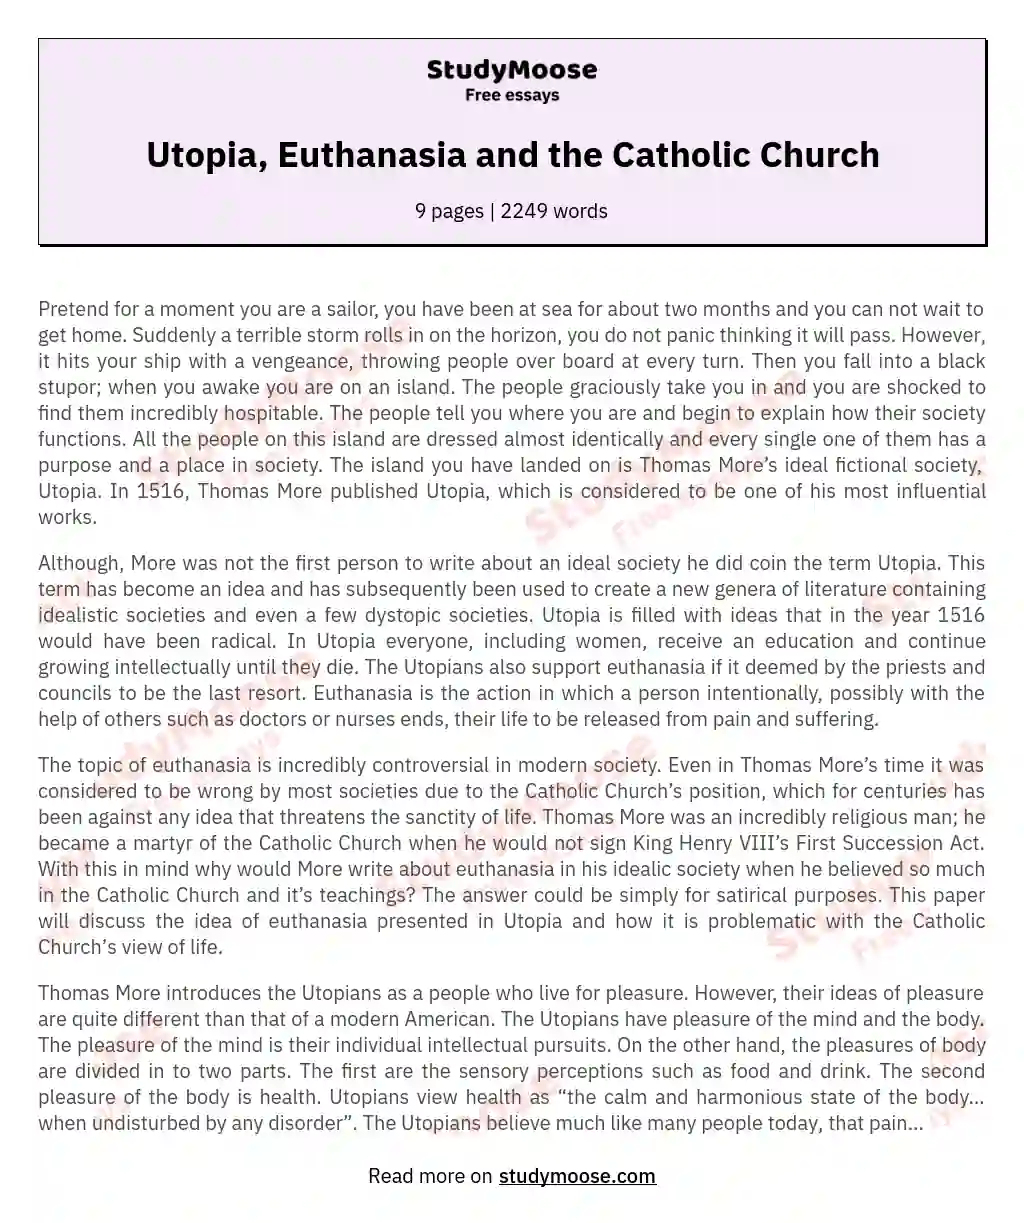 Utopia, Euthanasia and the Catholic Church